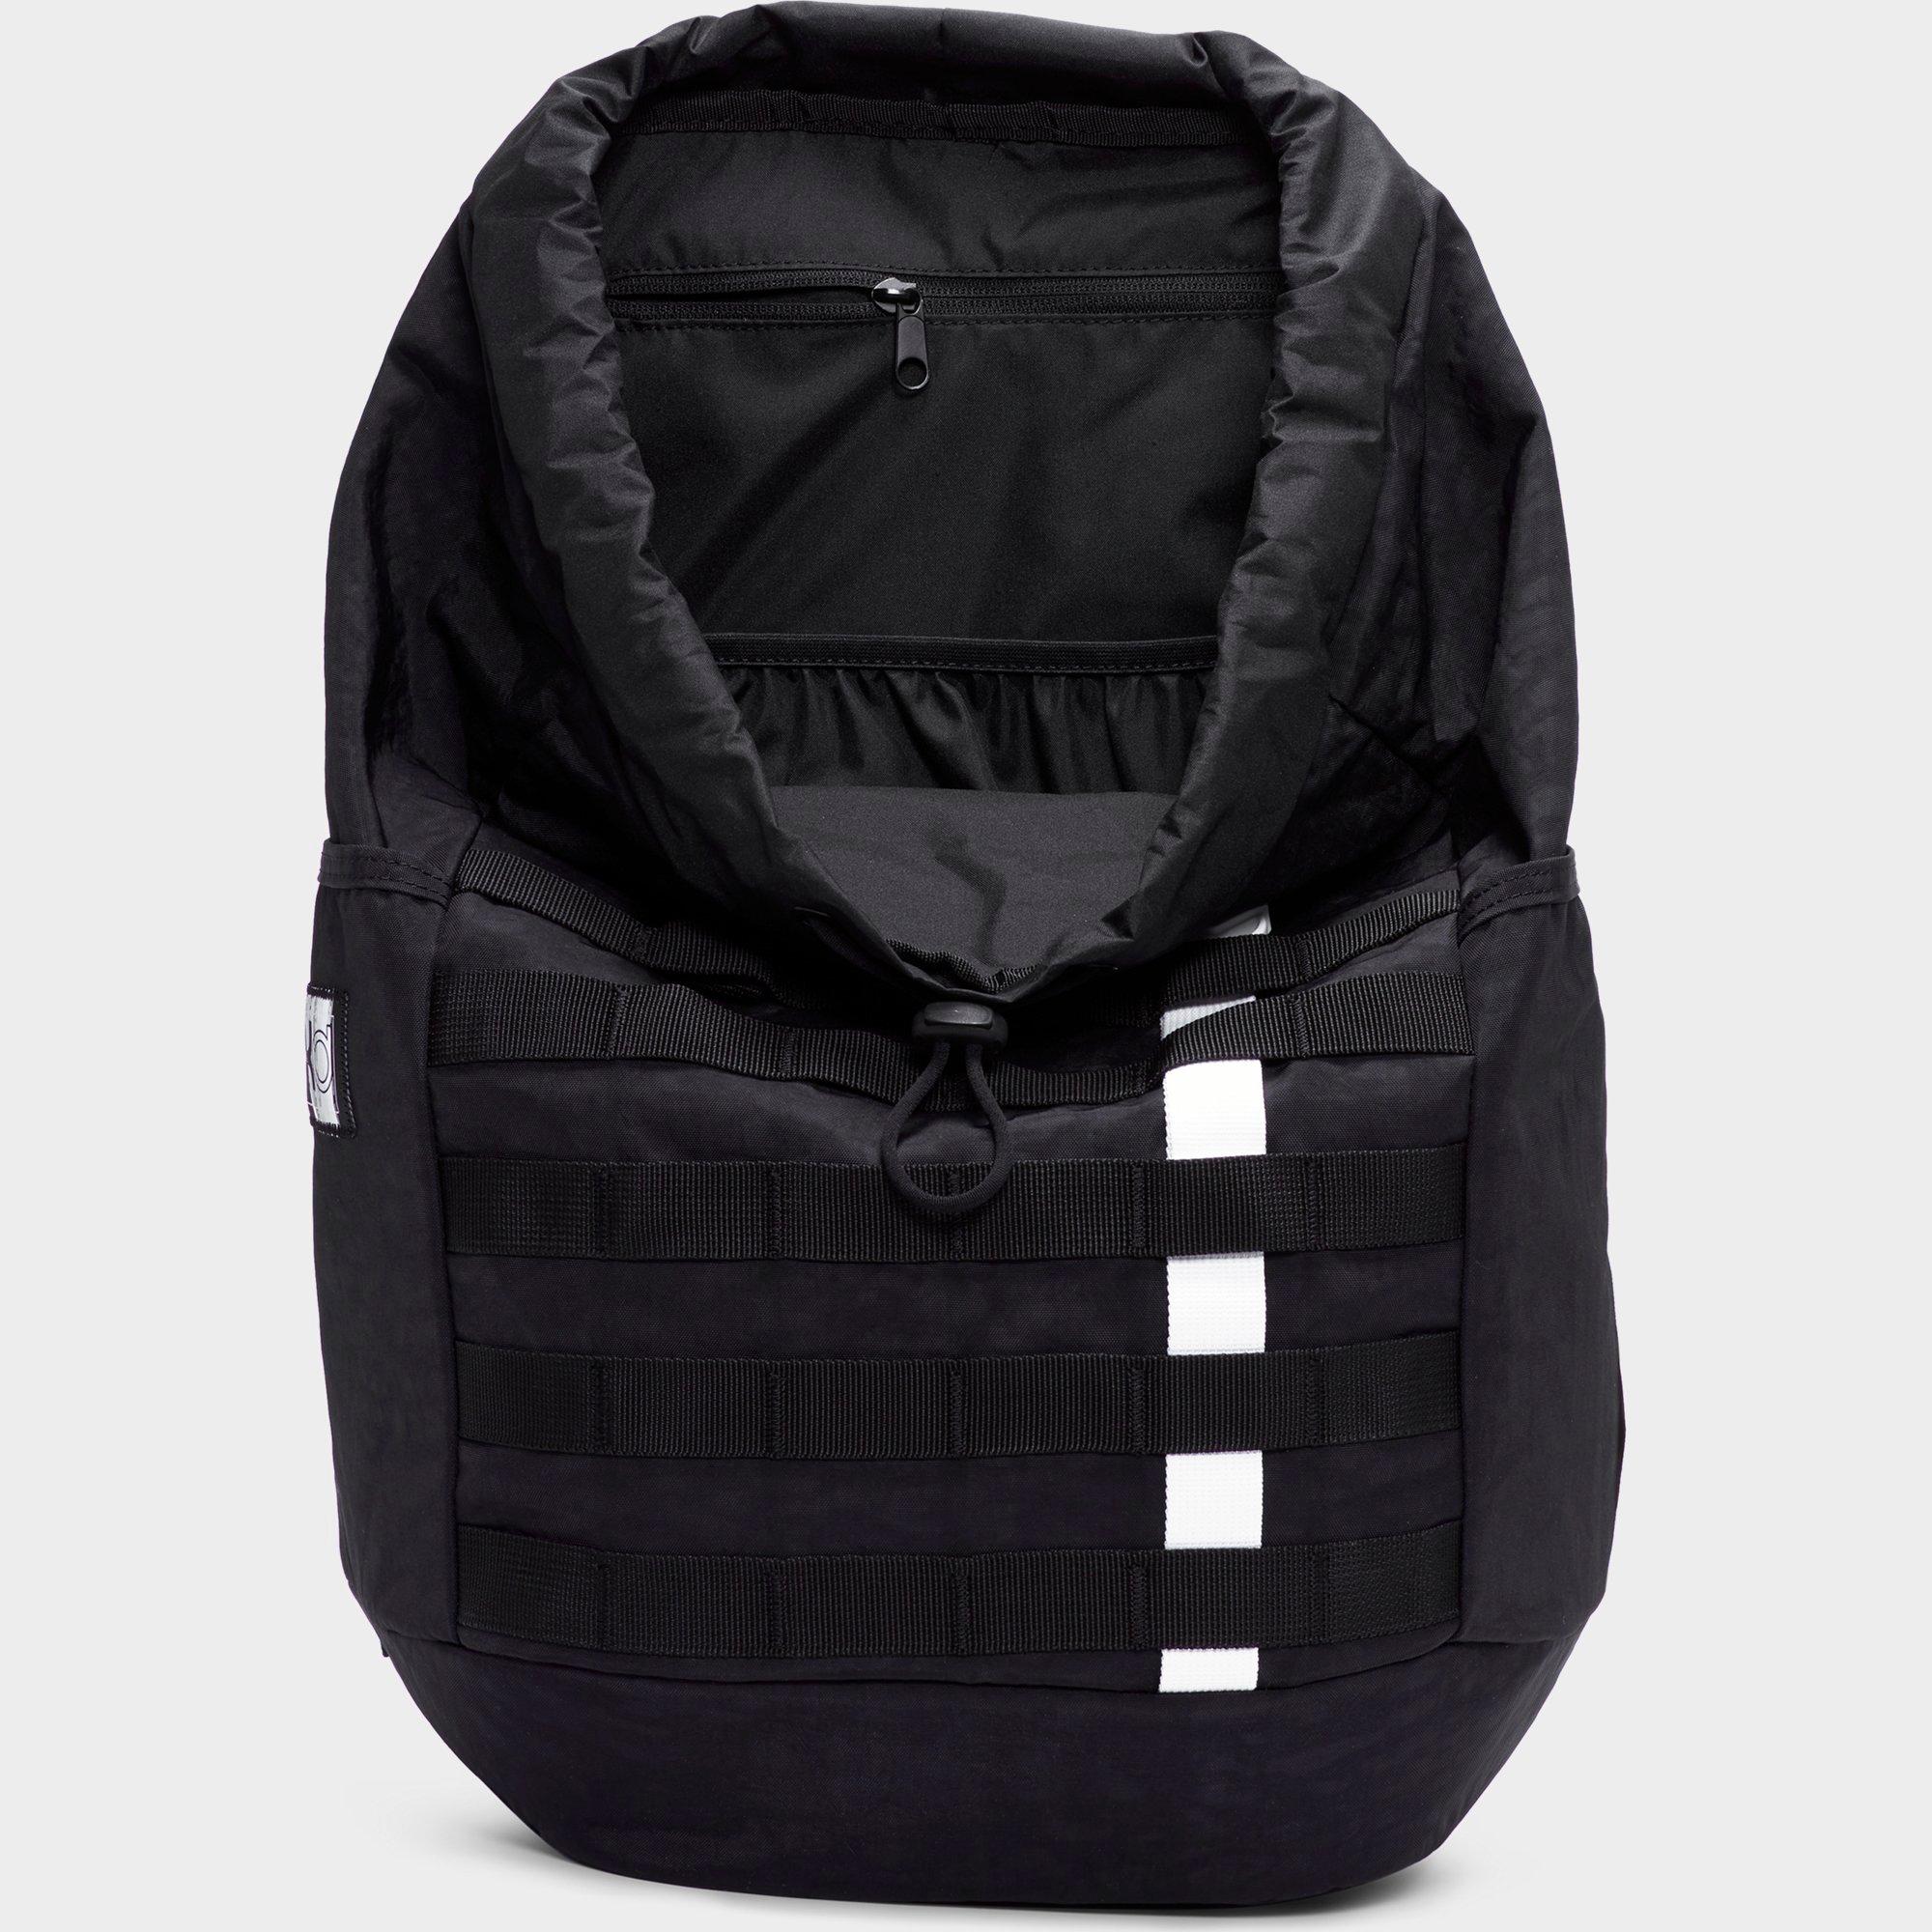 white kd backpack